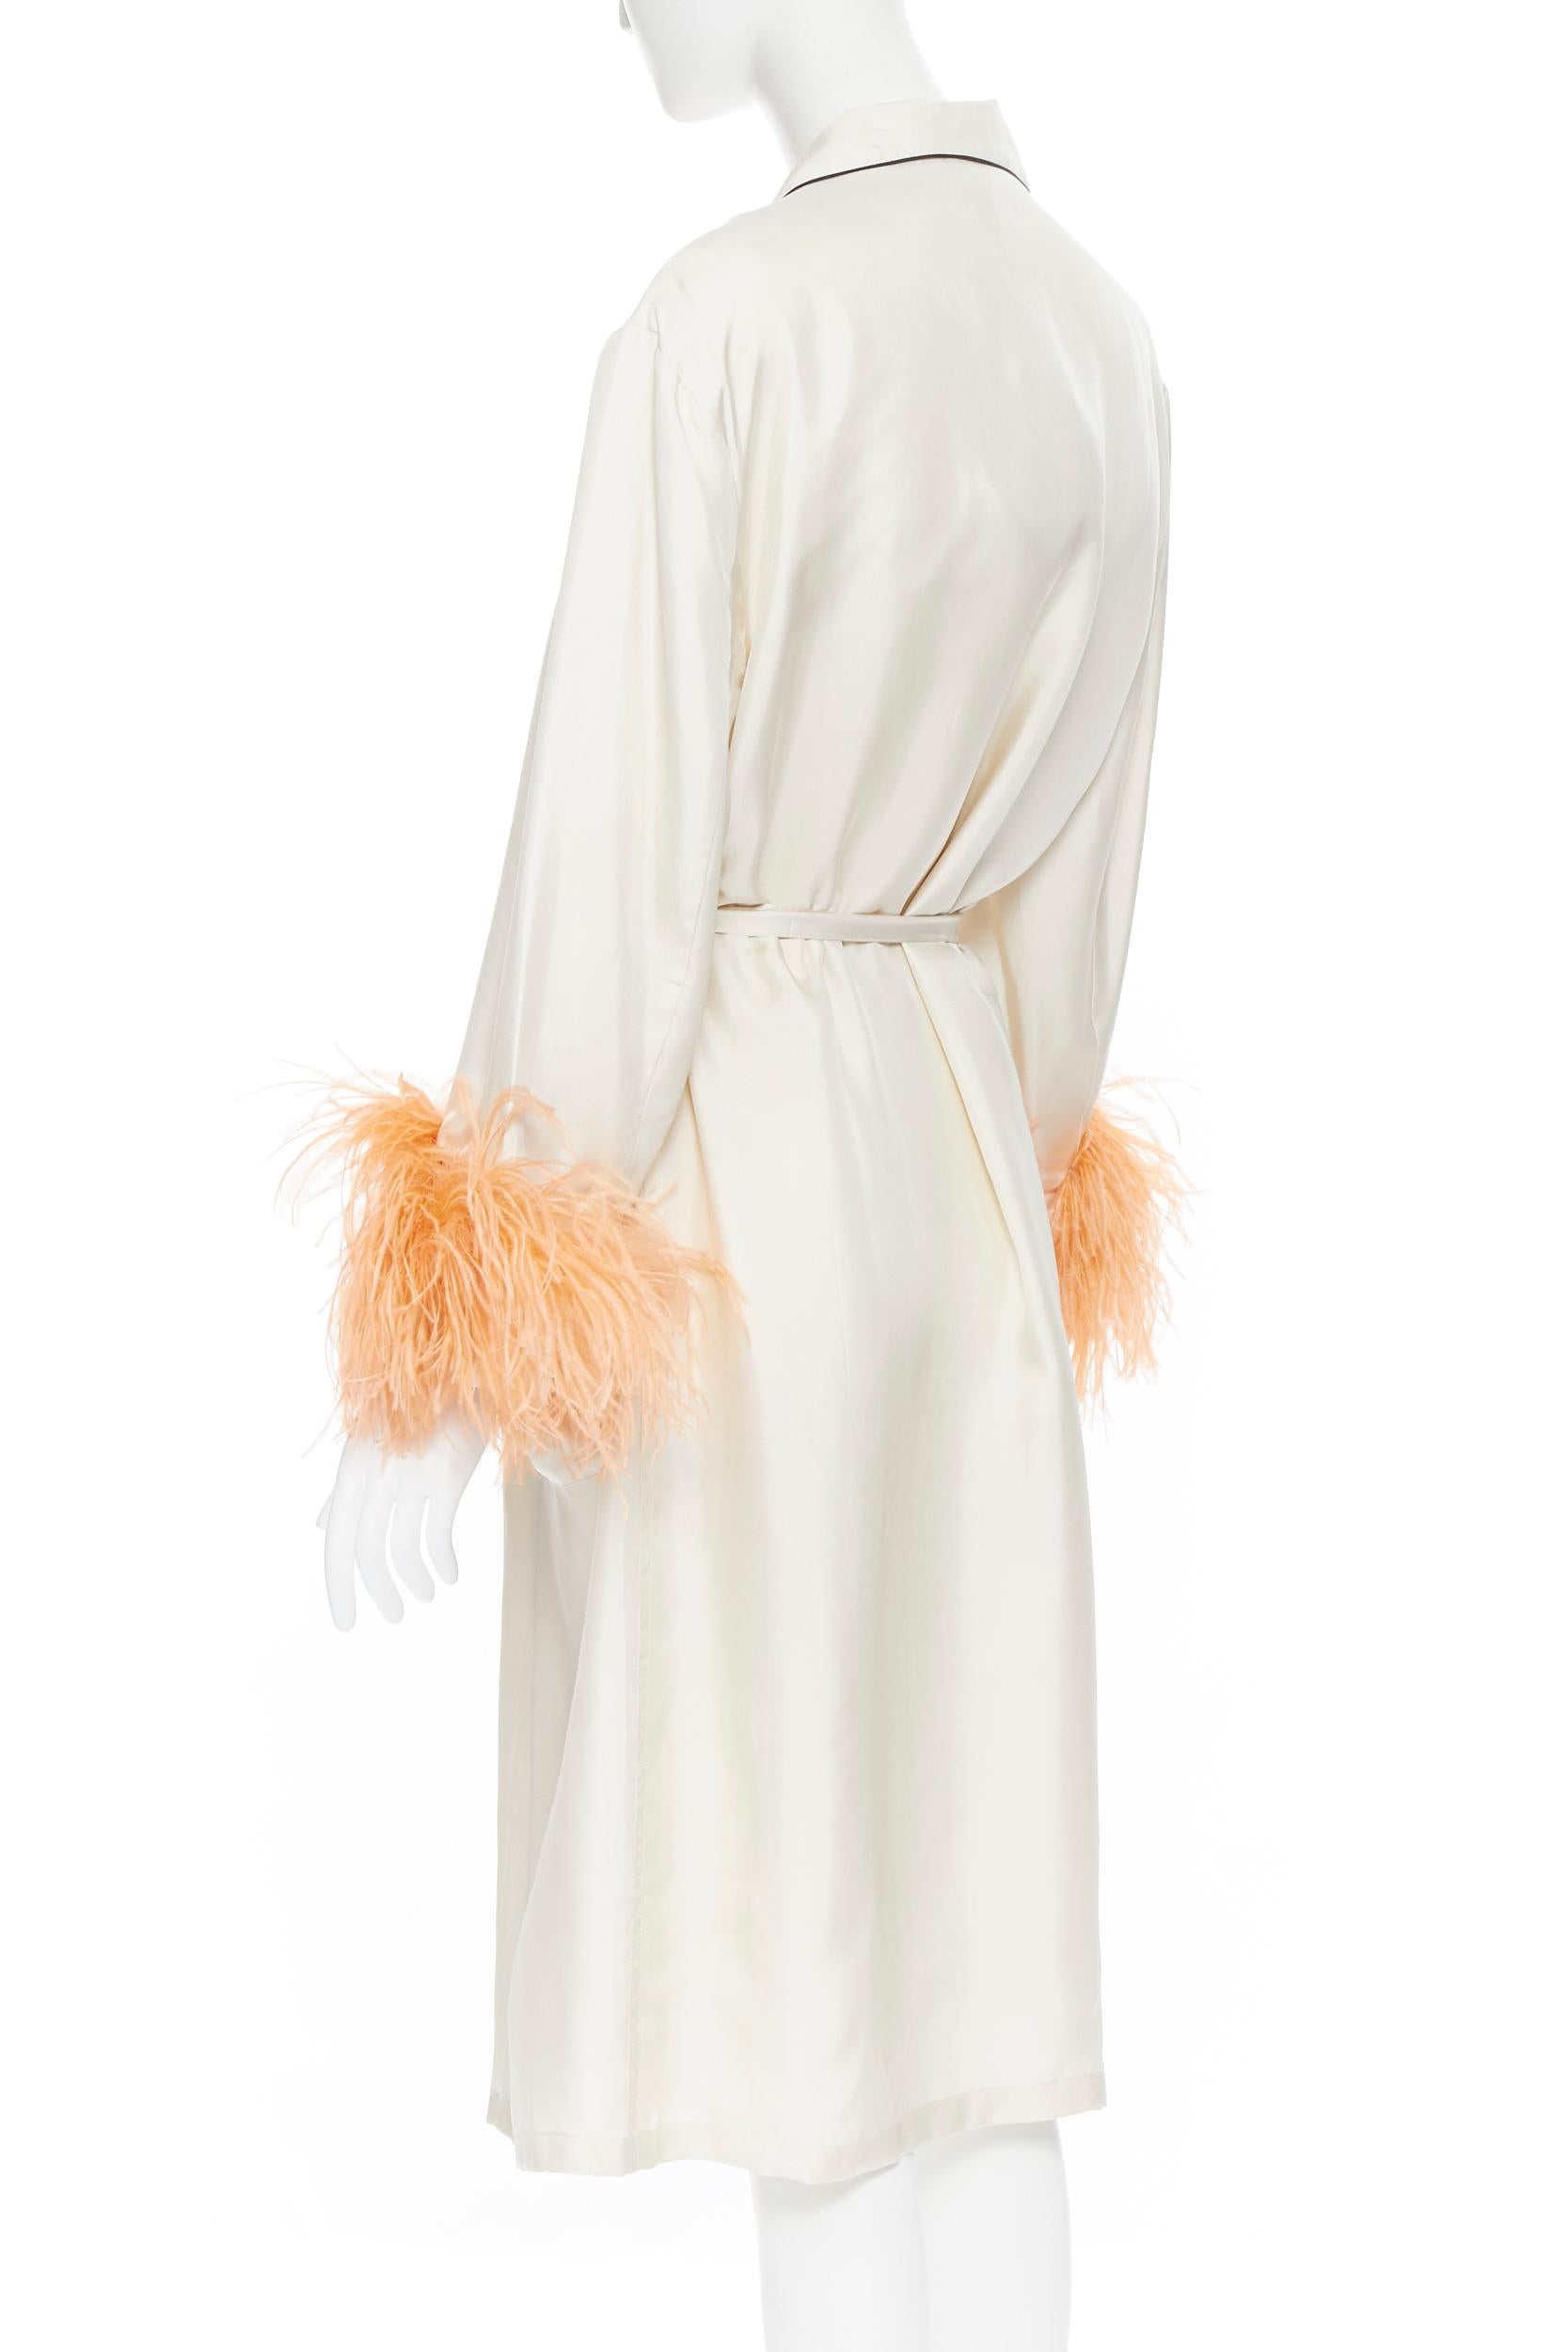 Women's new PRADA 100% silk beige black piping orange feather cuff robe coat Rihanna M